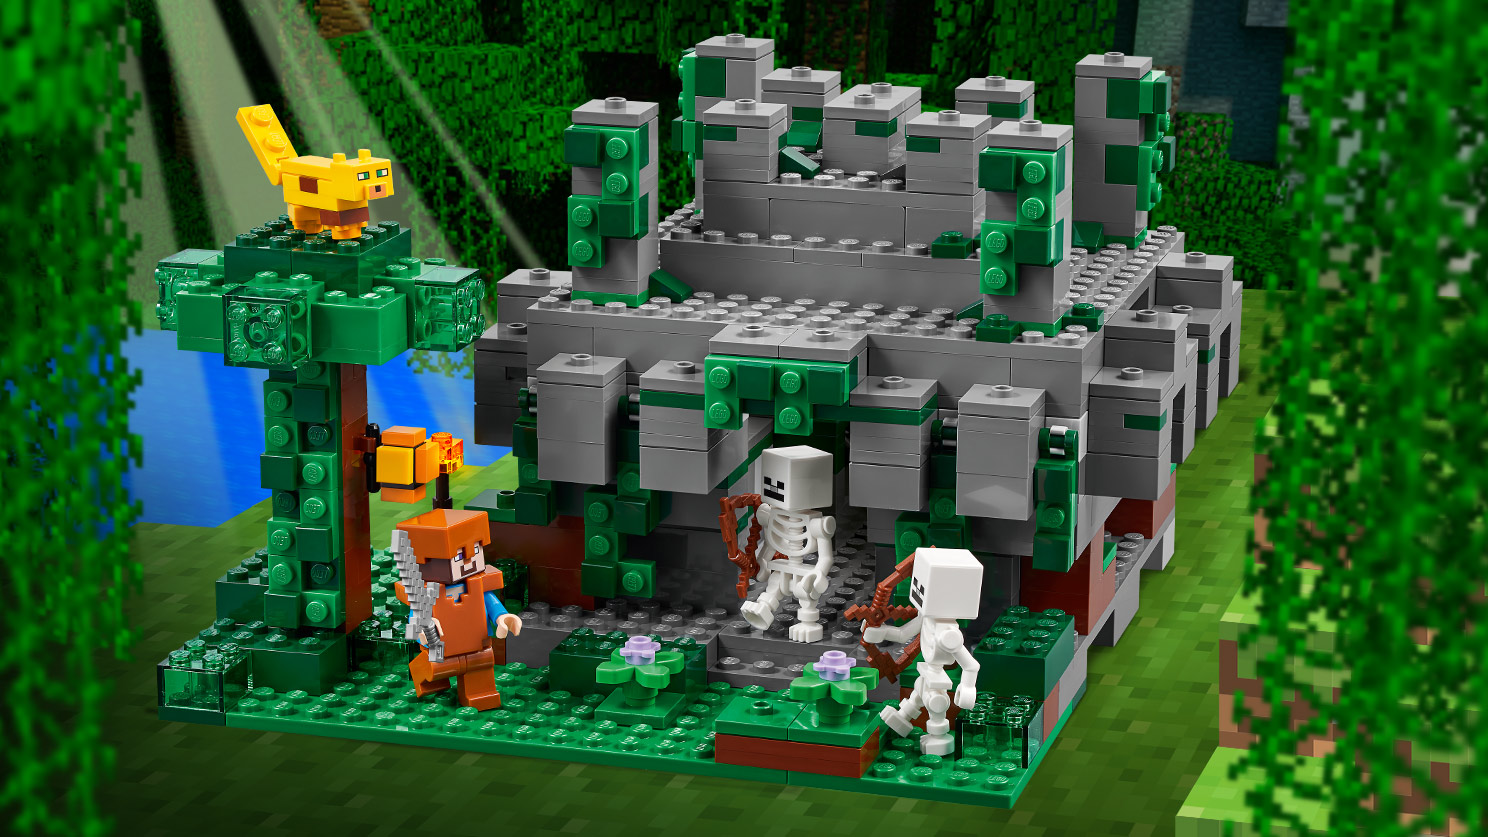 The Jungle Temple Lego Minecraft Sets Lego Com For Kids